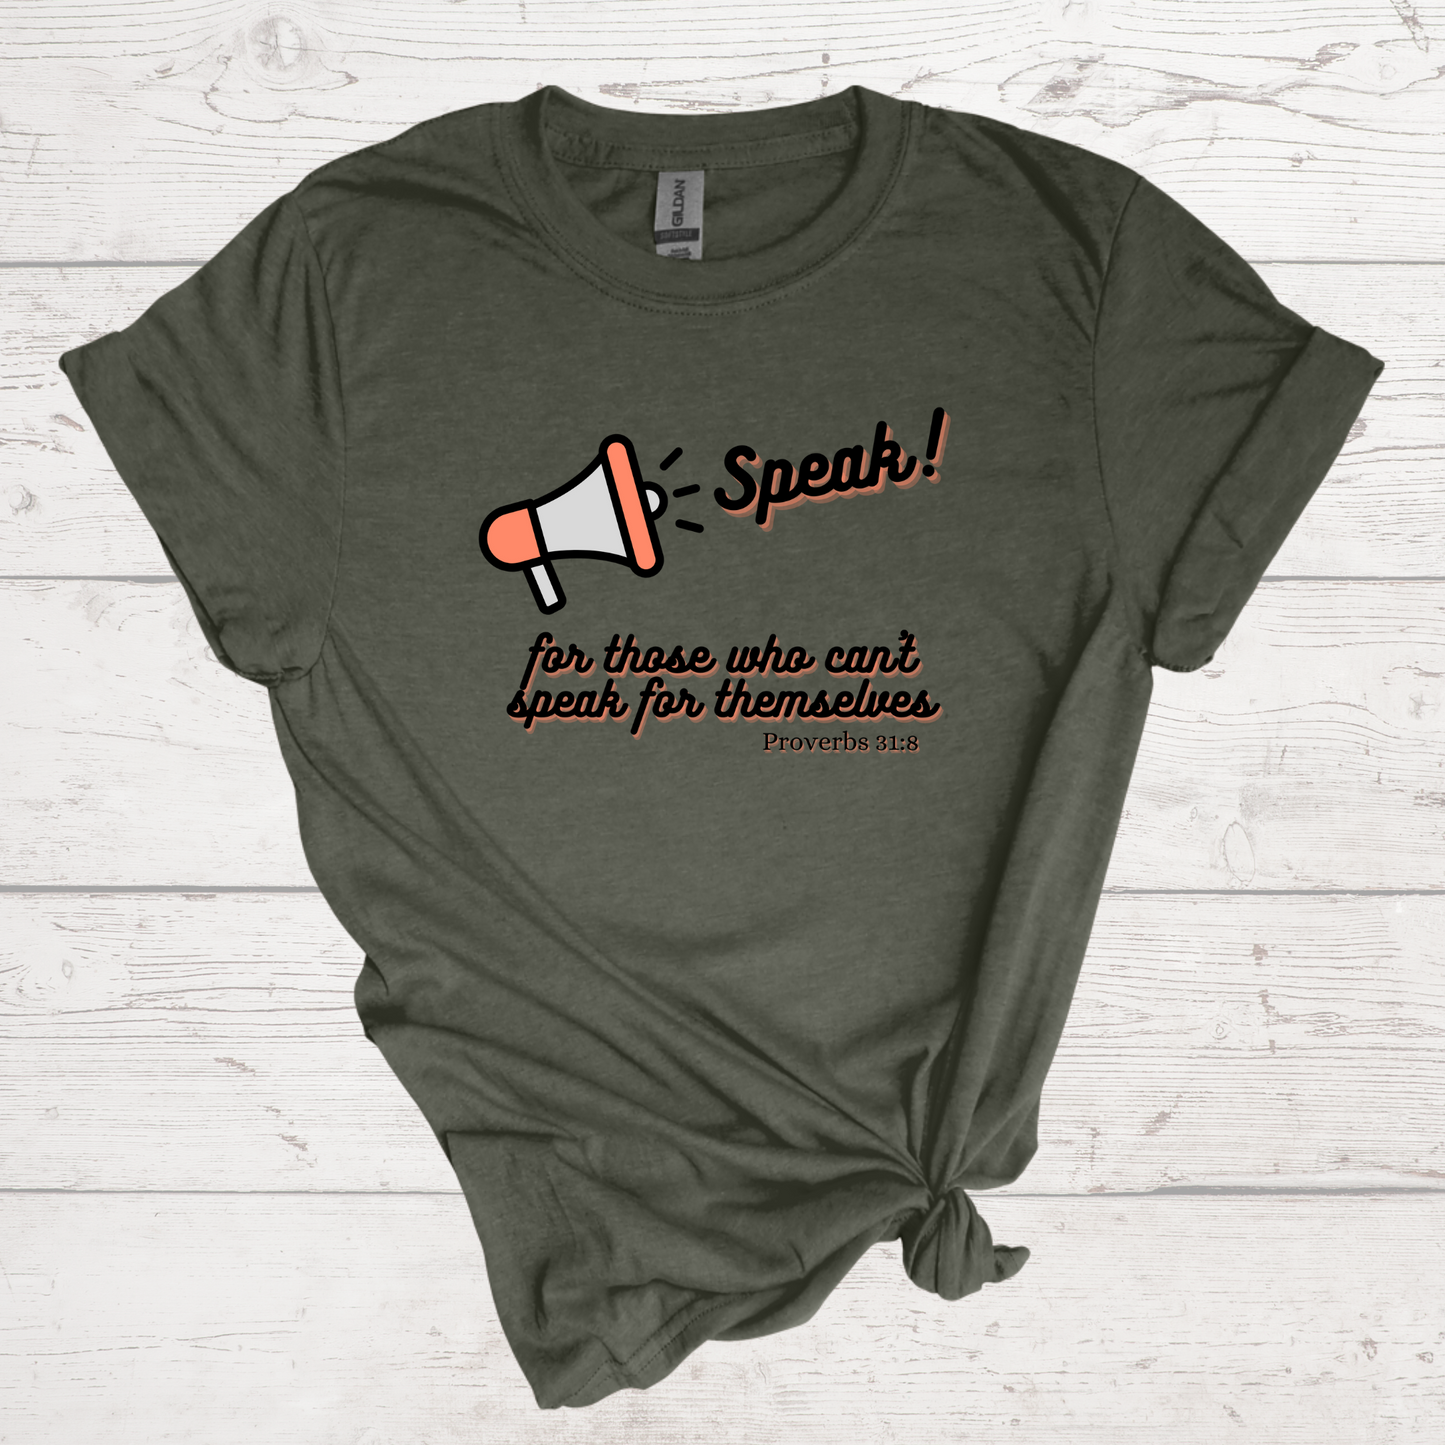 Speak! Shirt